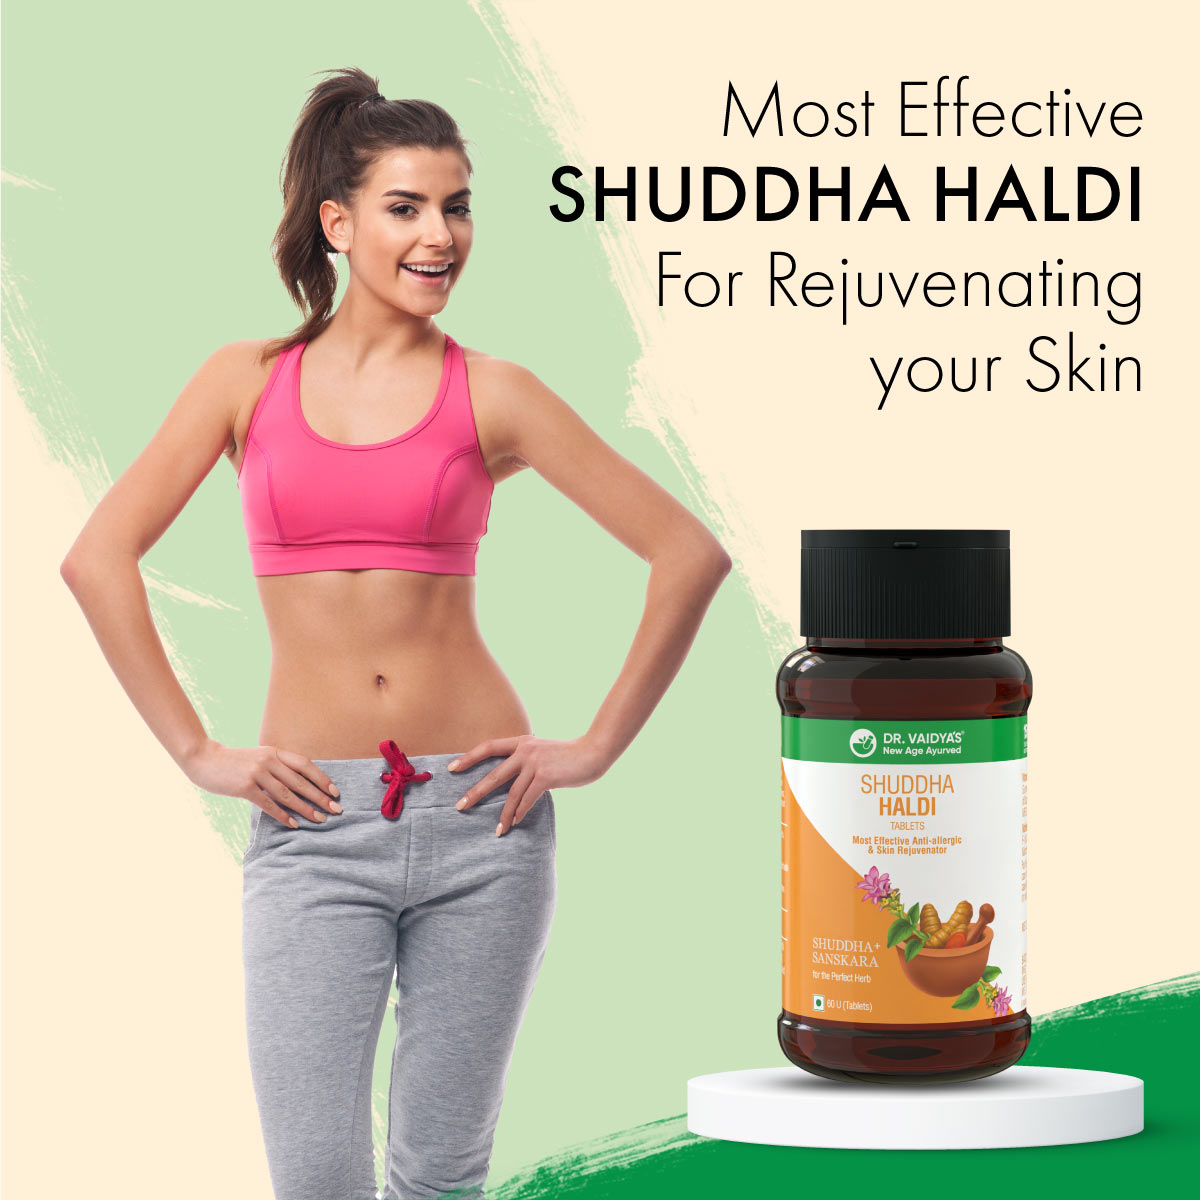 Shuddha Haldi Tablets: Most Effective Anti-Allergic & Skin Rejuvenator